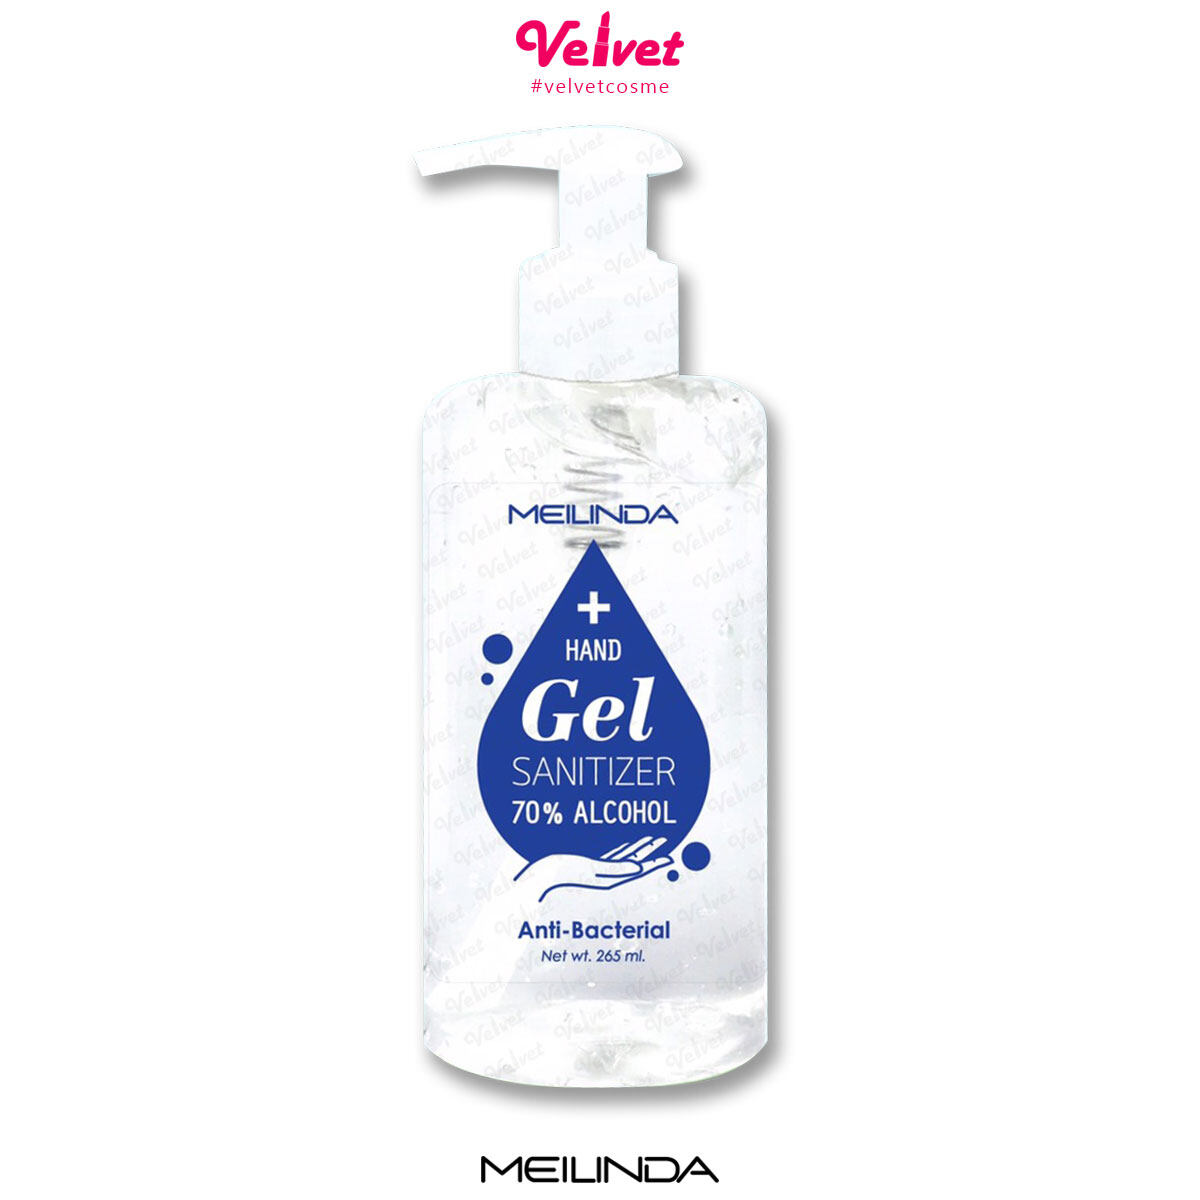 MeiLinda เจลล้างมือ แอลกอฮอล์ Hand Gel Sanitizer 70% Alcohol  กลิ่น อื่นๆปริมาณ (มล.) 45